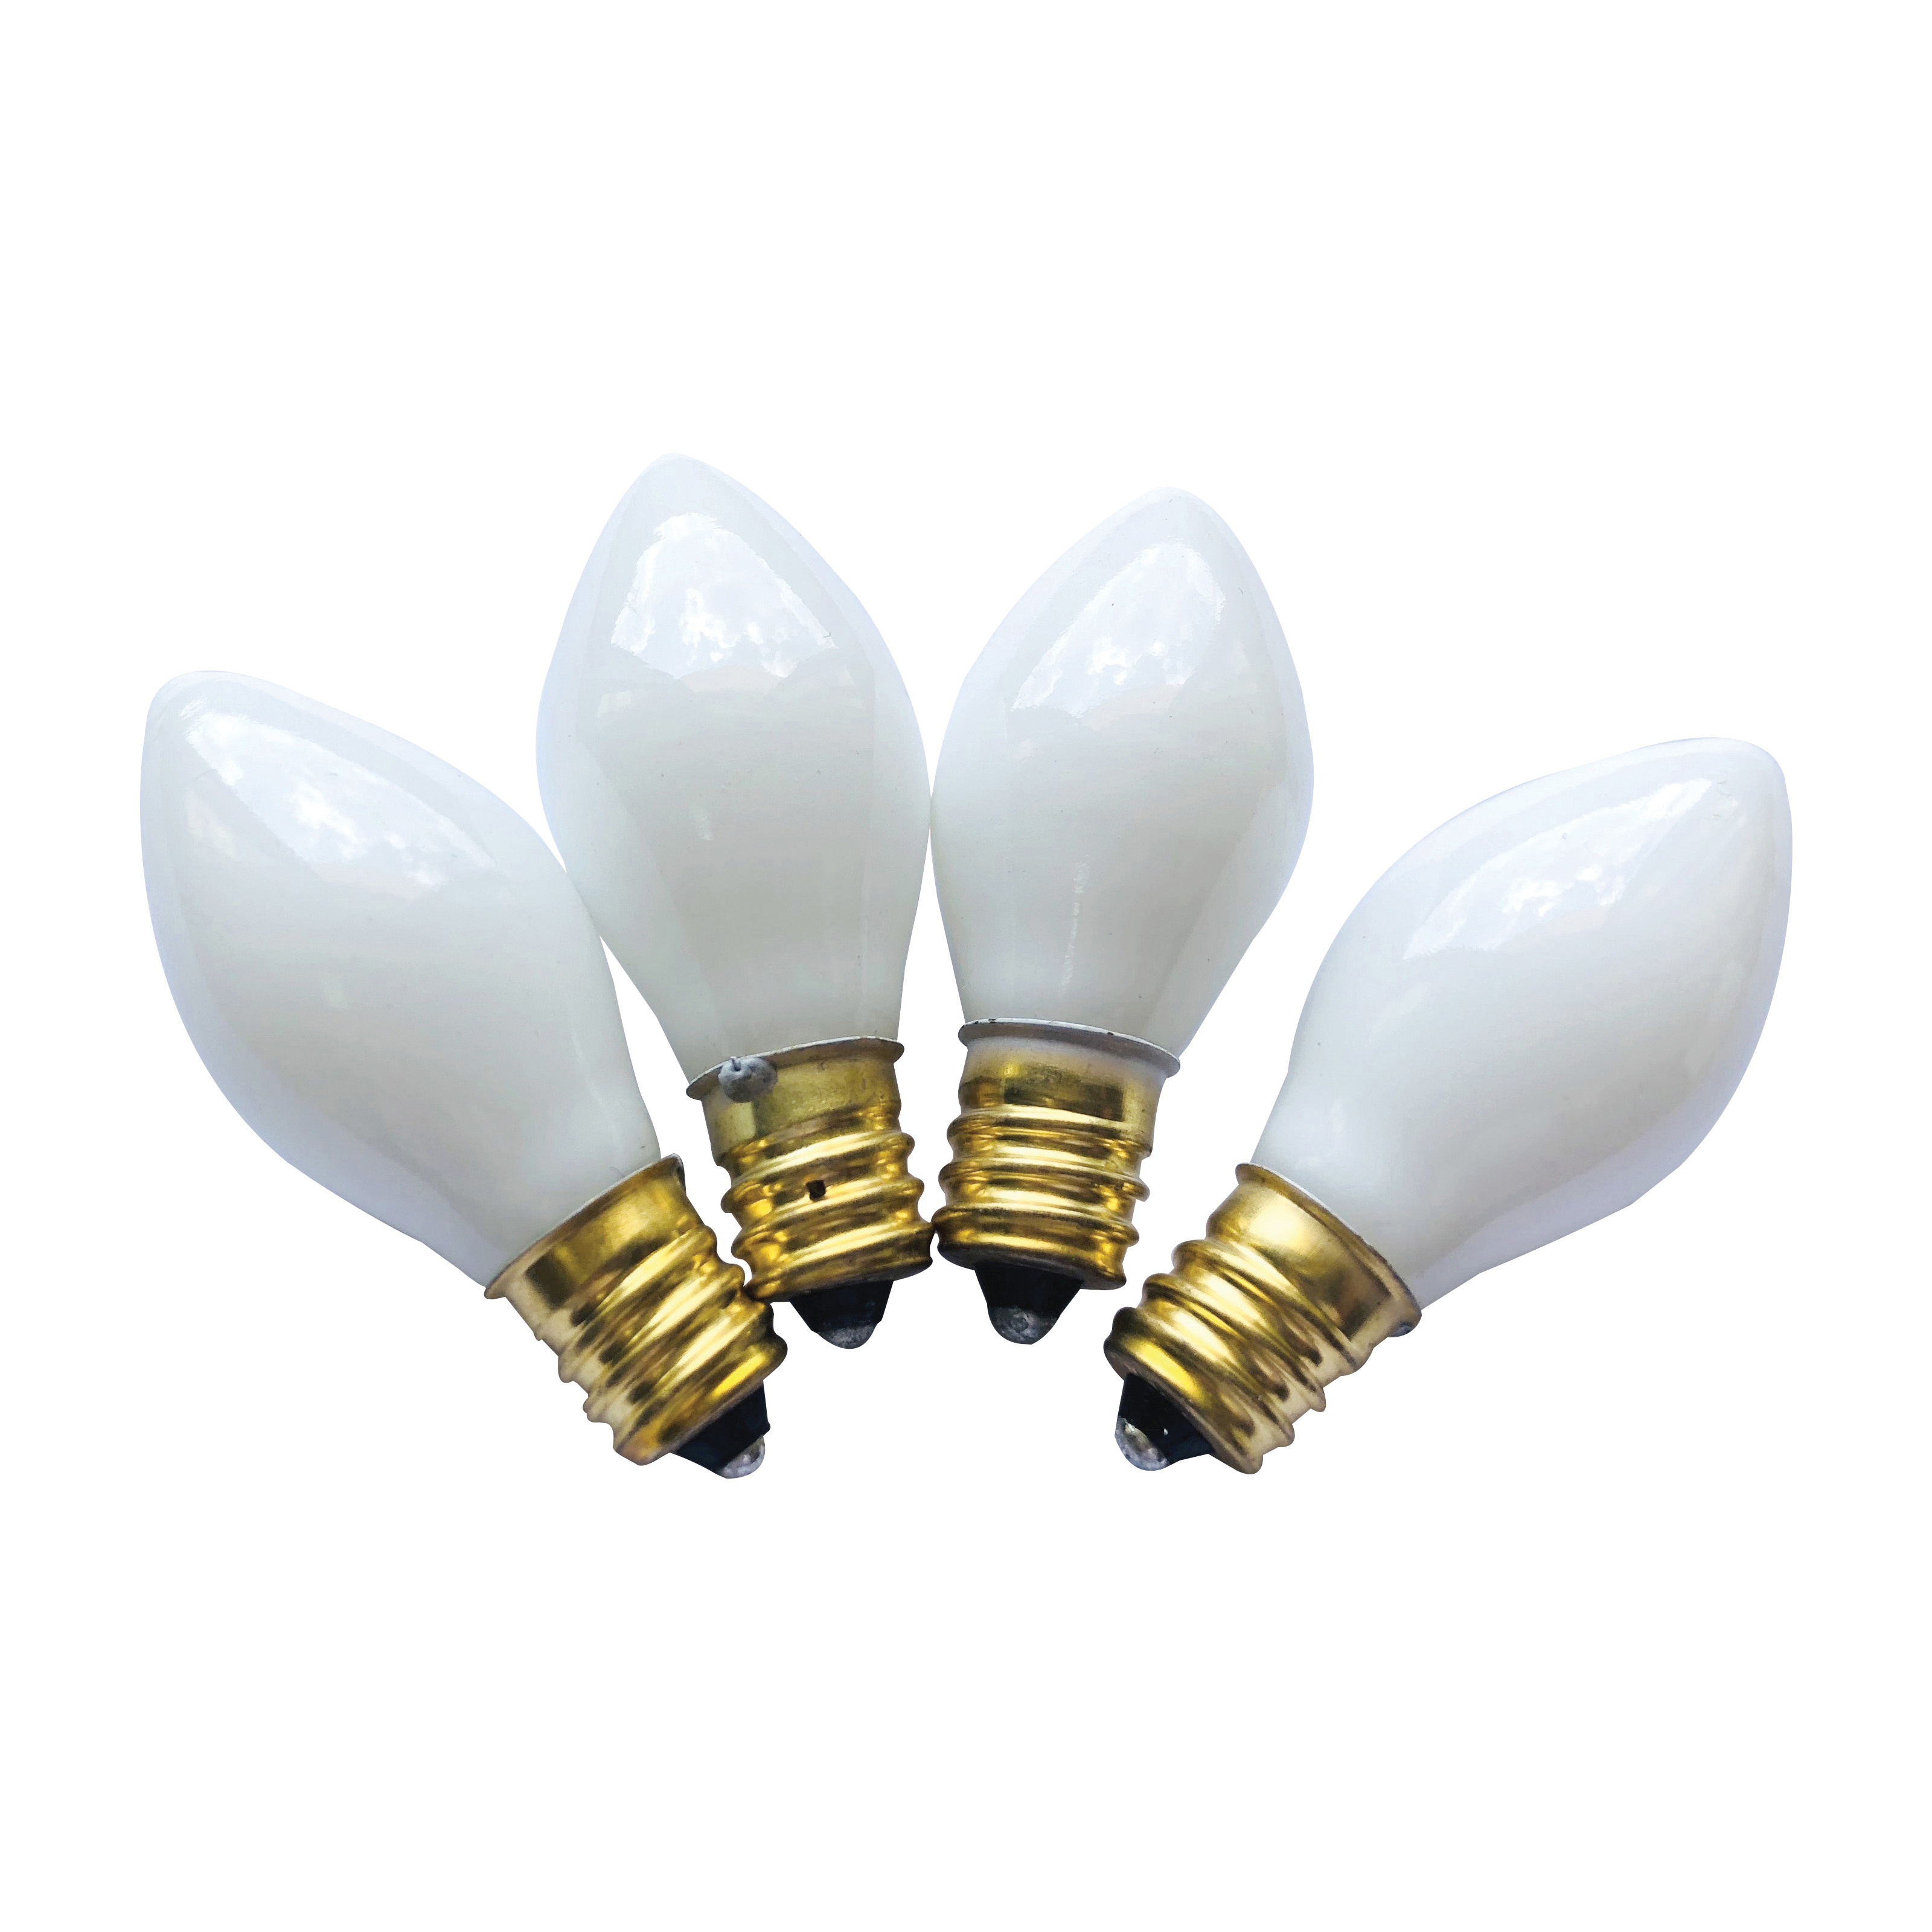 19151 Replacement Bulb, 5 W, Candelabra Lamp Base, Incandescent Lamp, Ceramic White Light